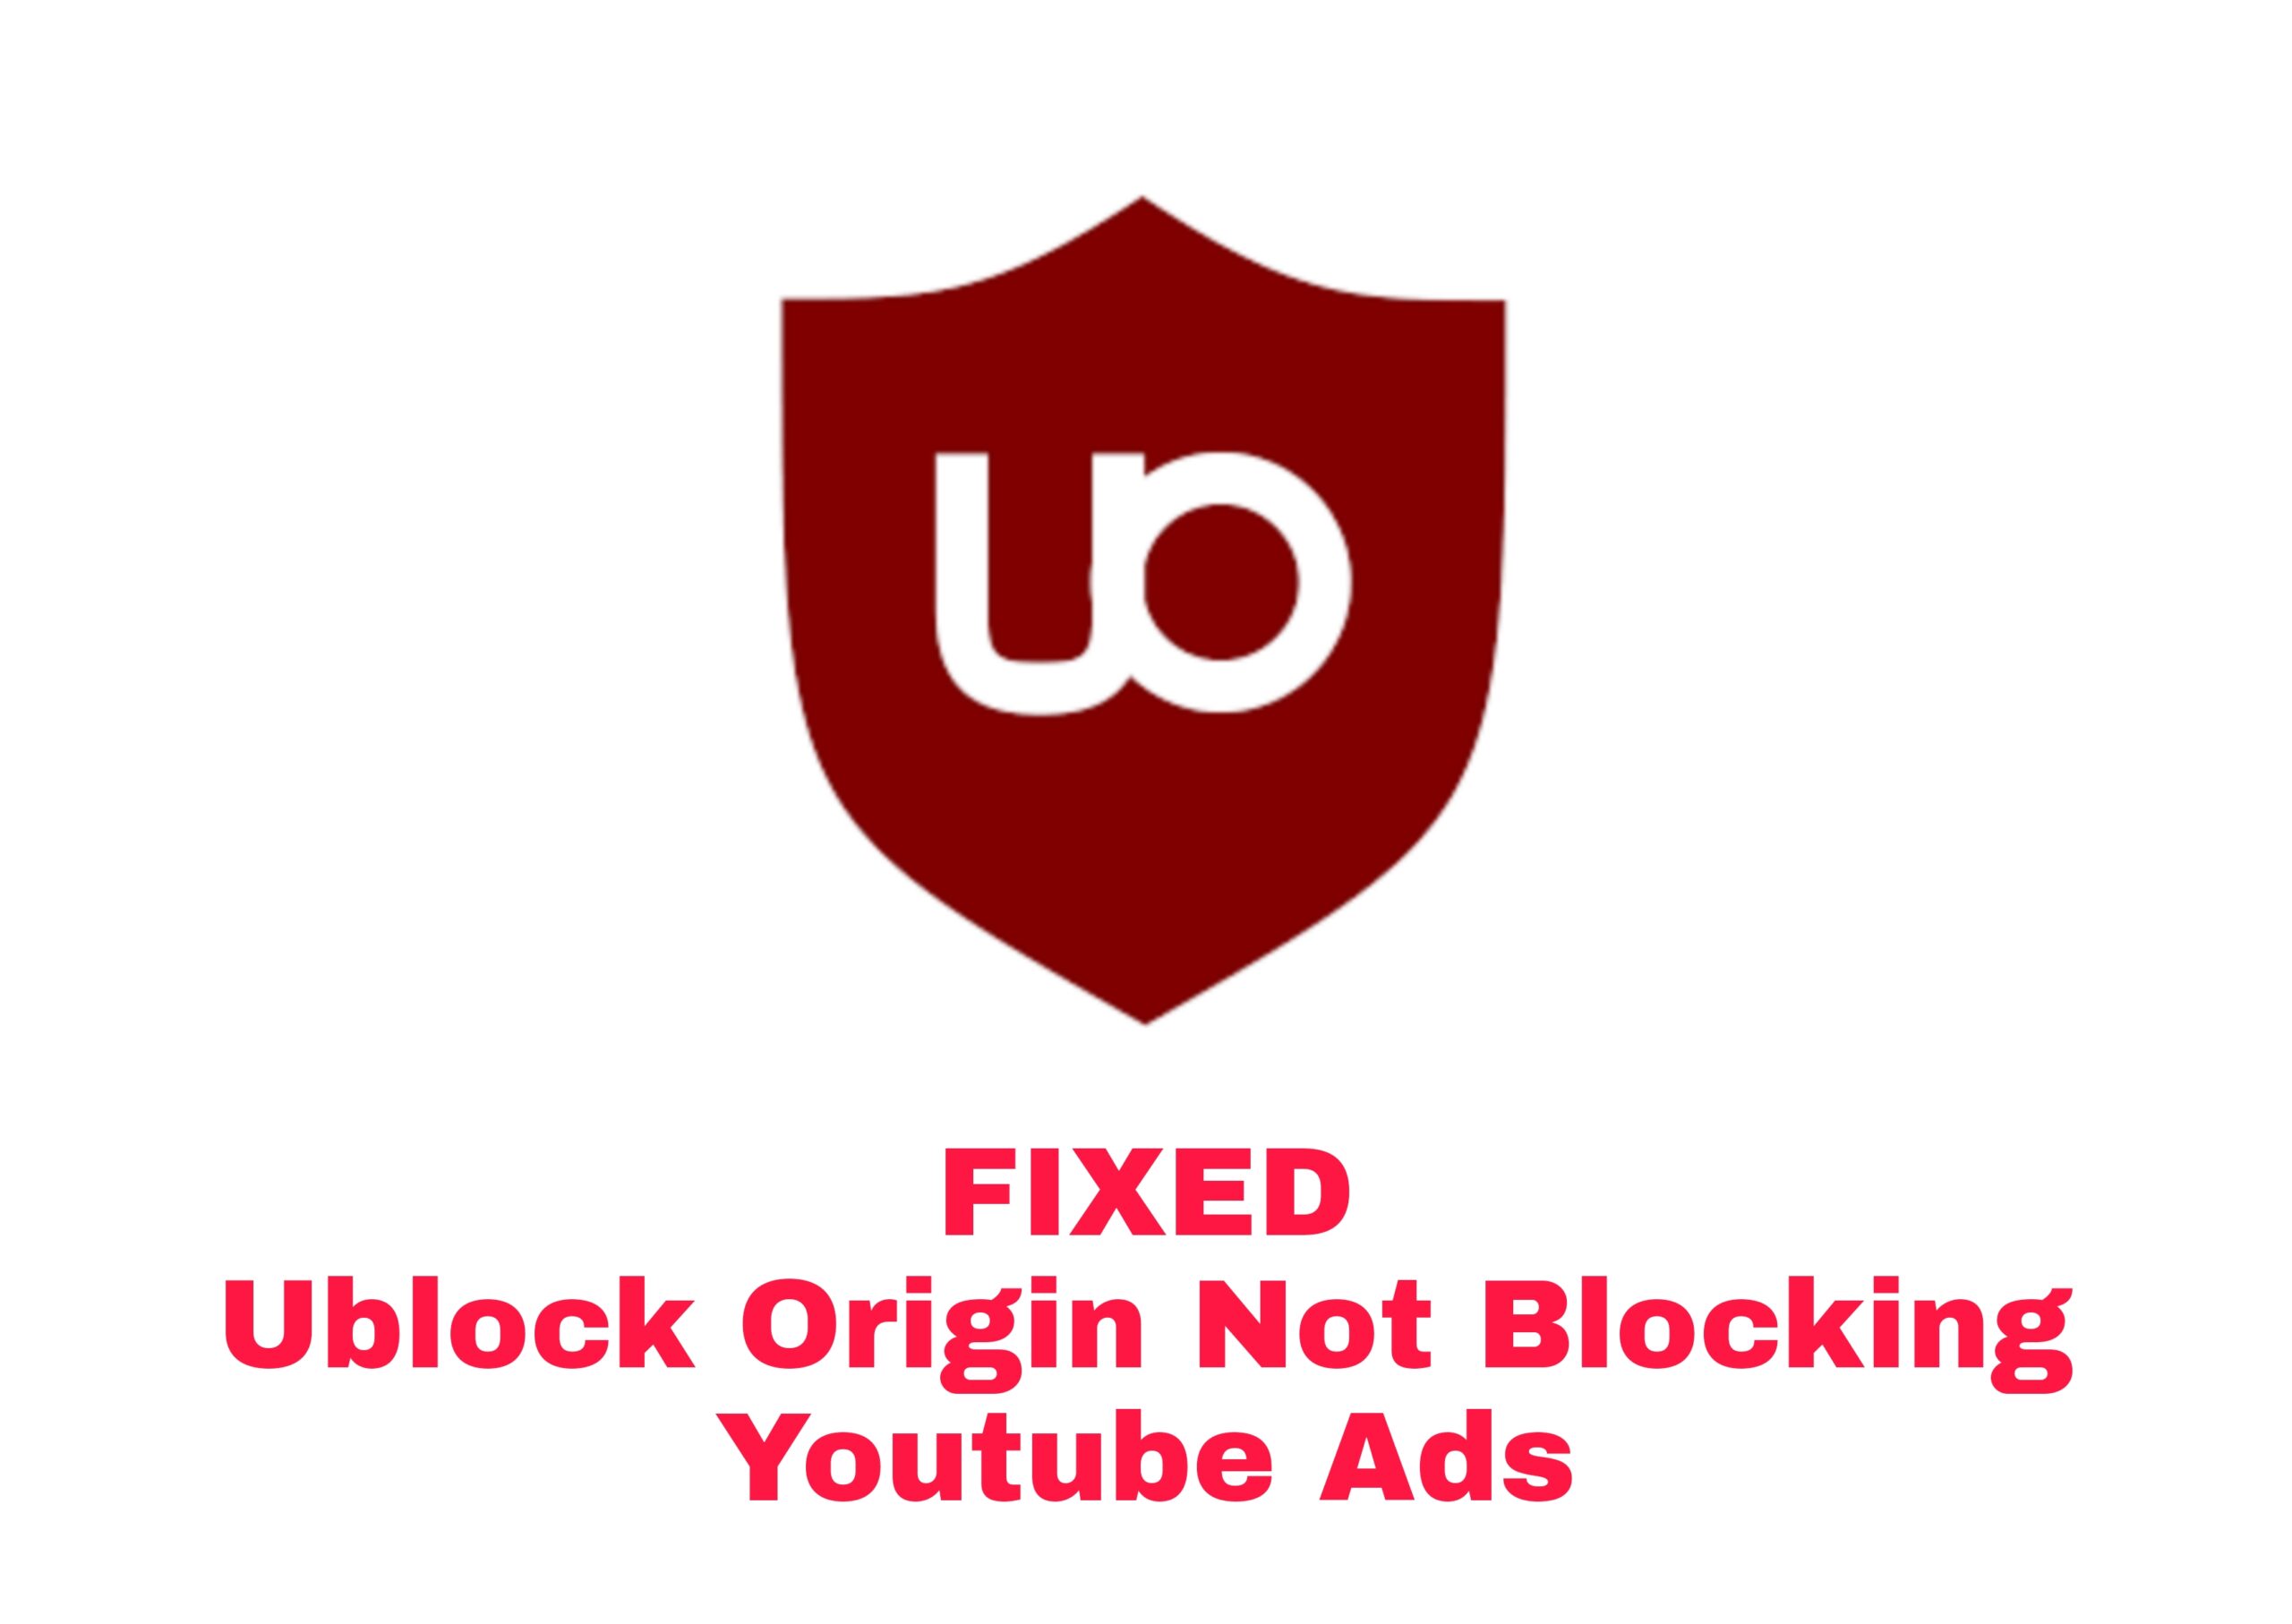 FIXED: Ublock Origin does not block YOUTUBE 2022 ads 